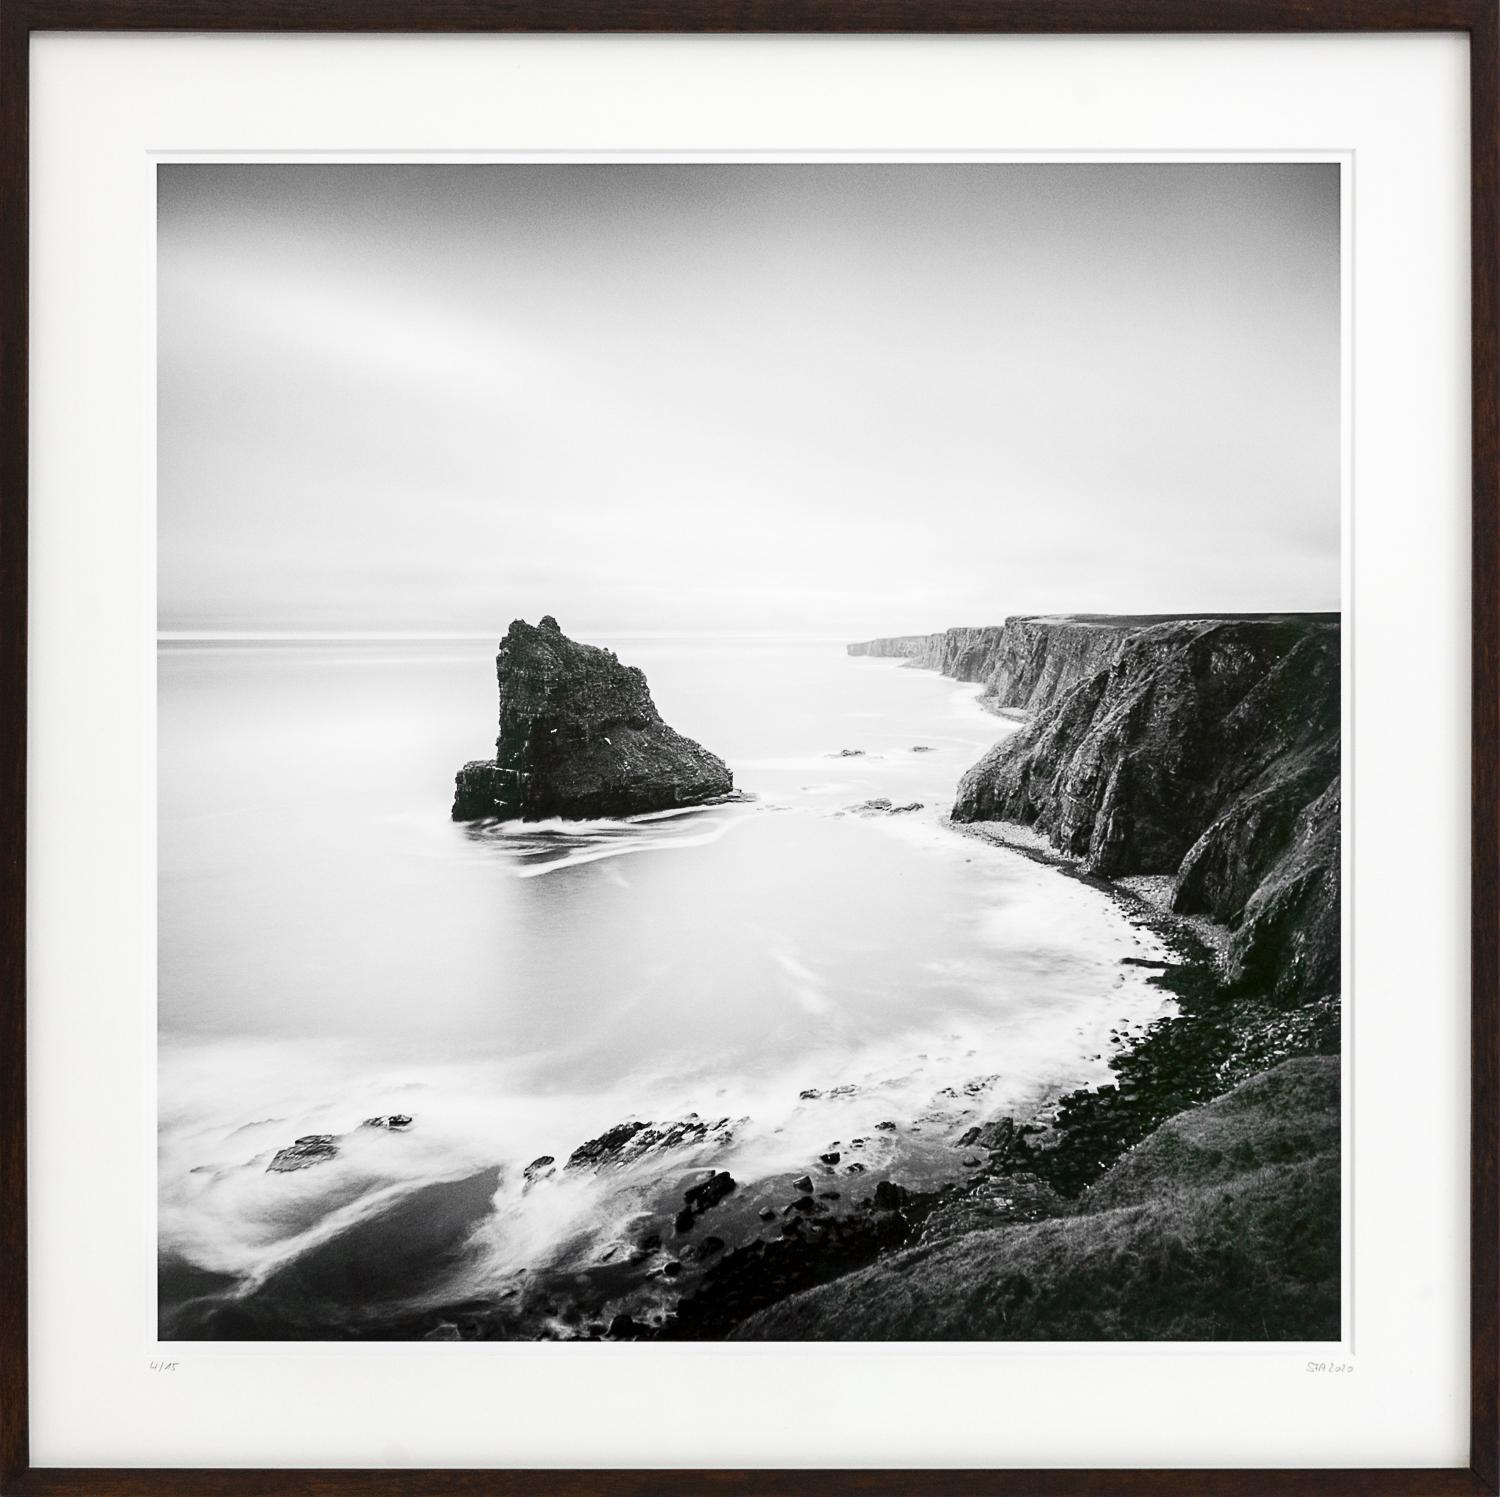 Gerald Berghammer Landscape Photograph - Surreal Moment, Cliffs, Rocks, Scotland, black white fineart photography, framed